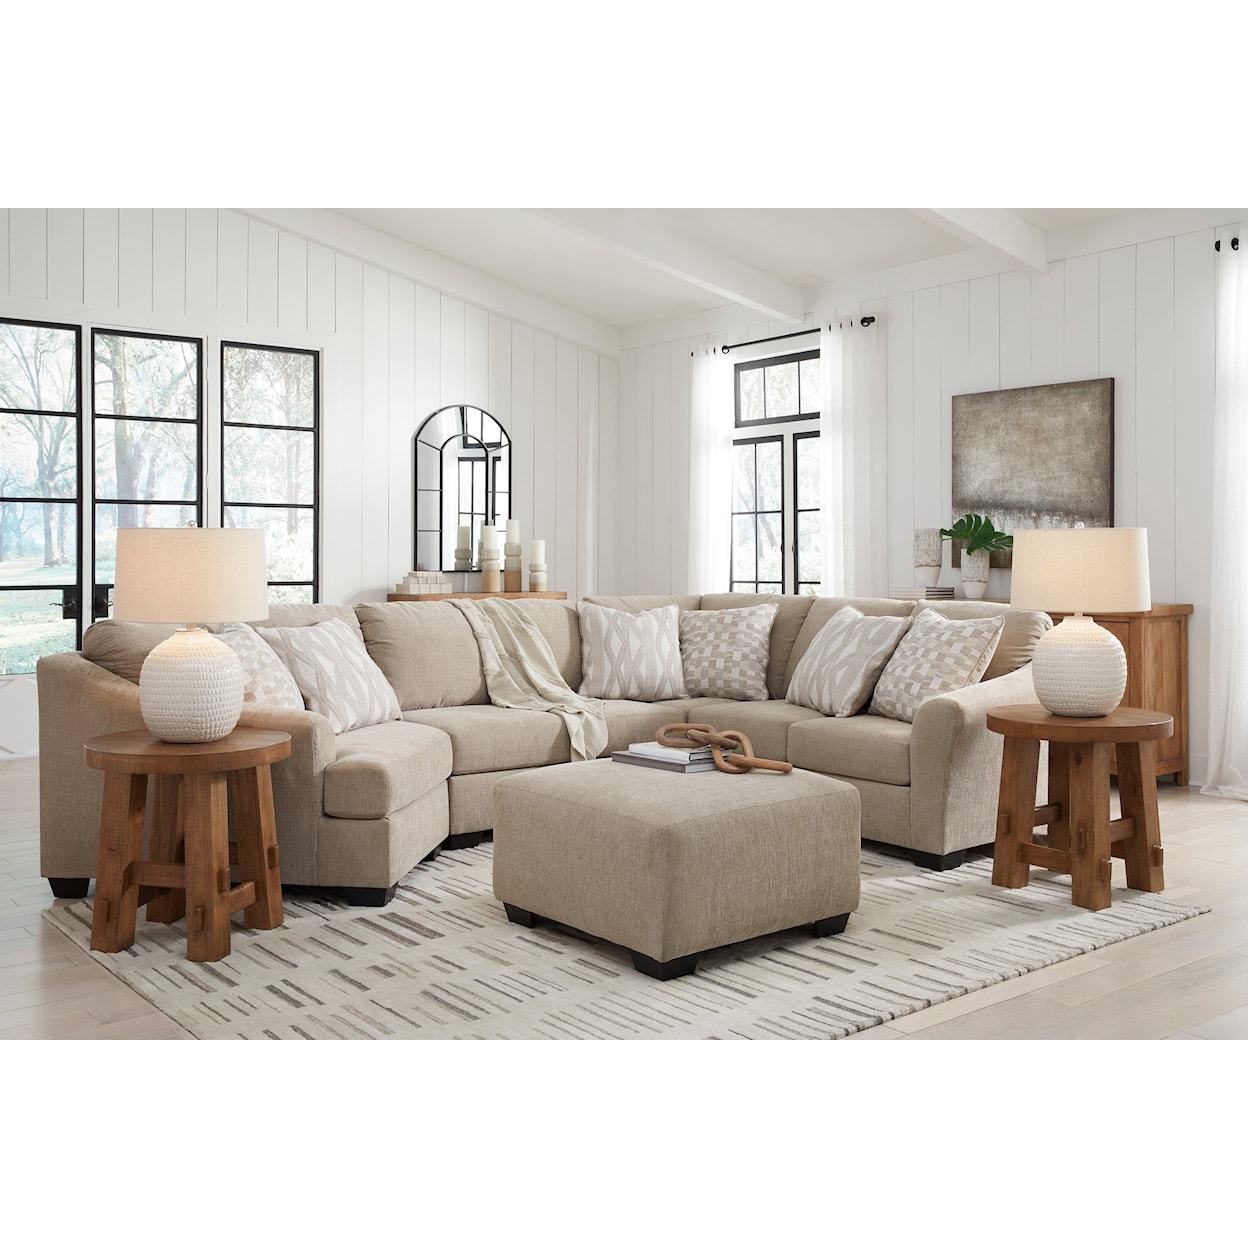 StyleLine Brogan Bay Living Room Set